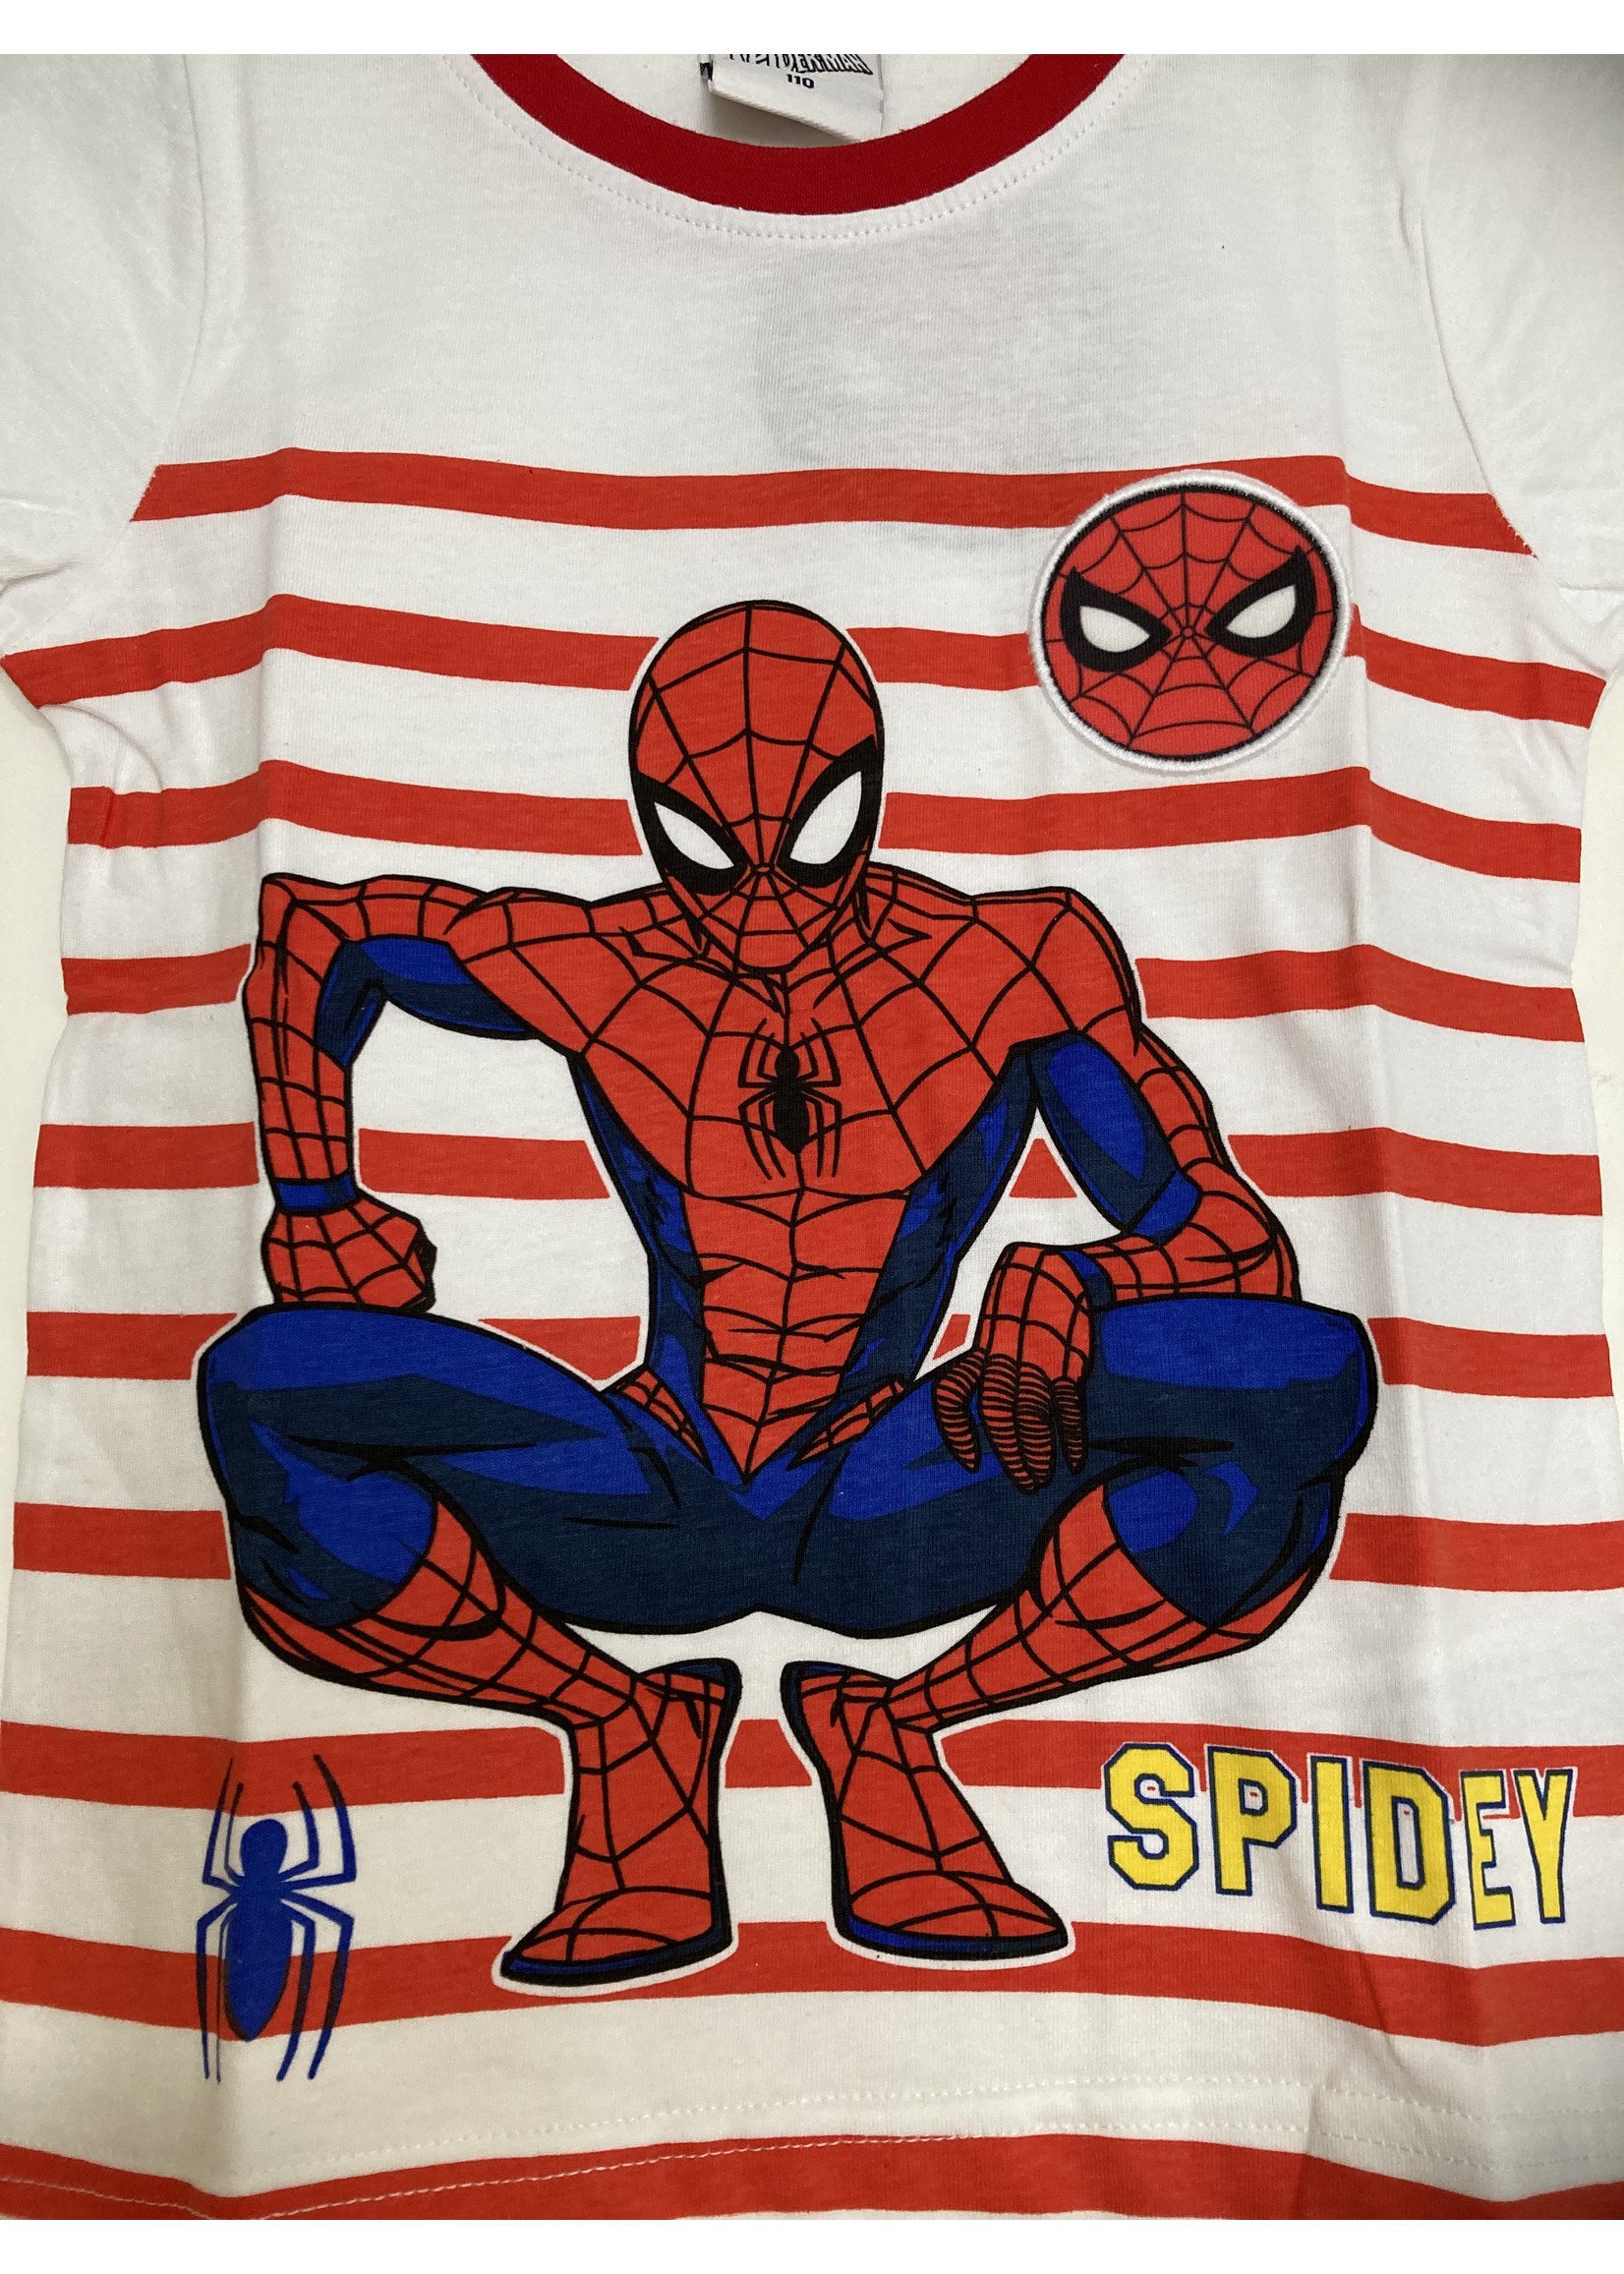 Marvel Spiderman T-shirt from Marvel red